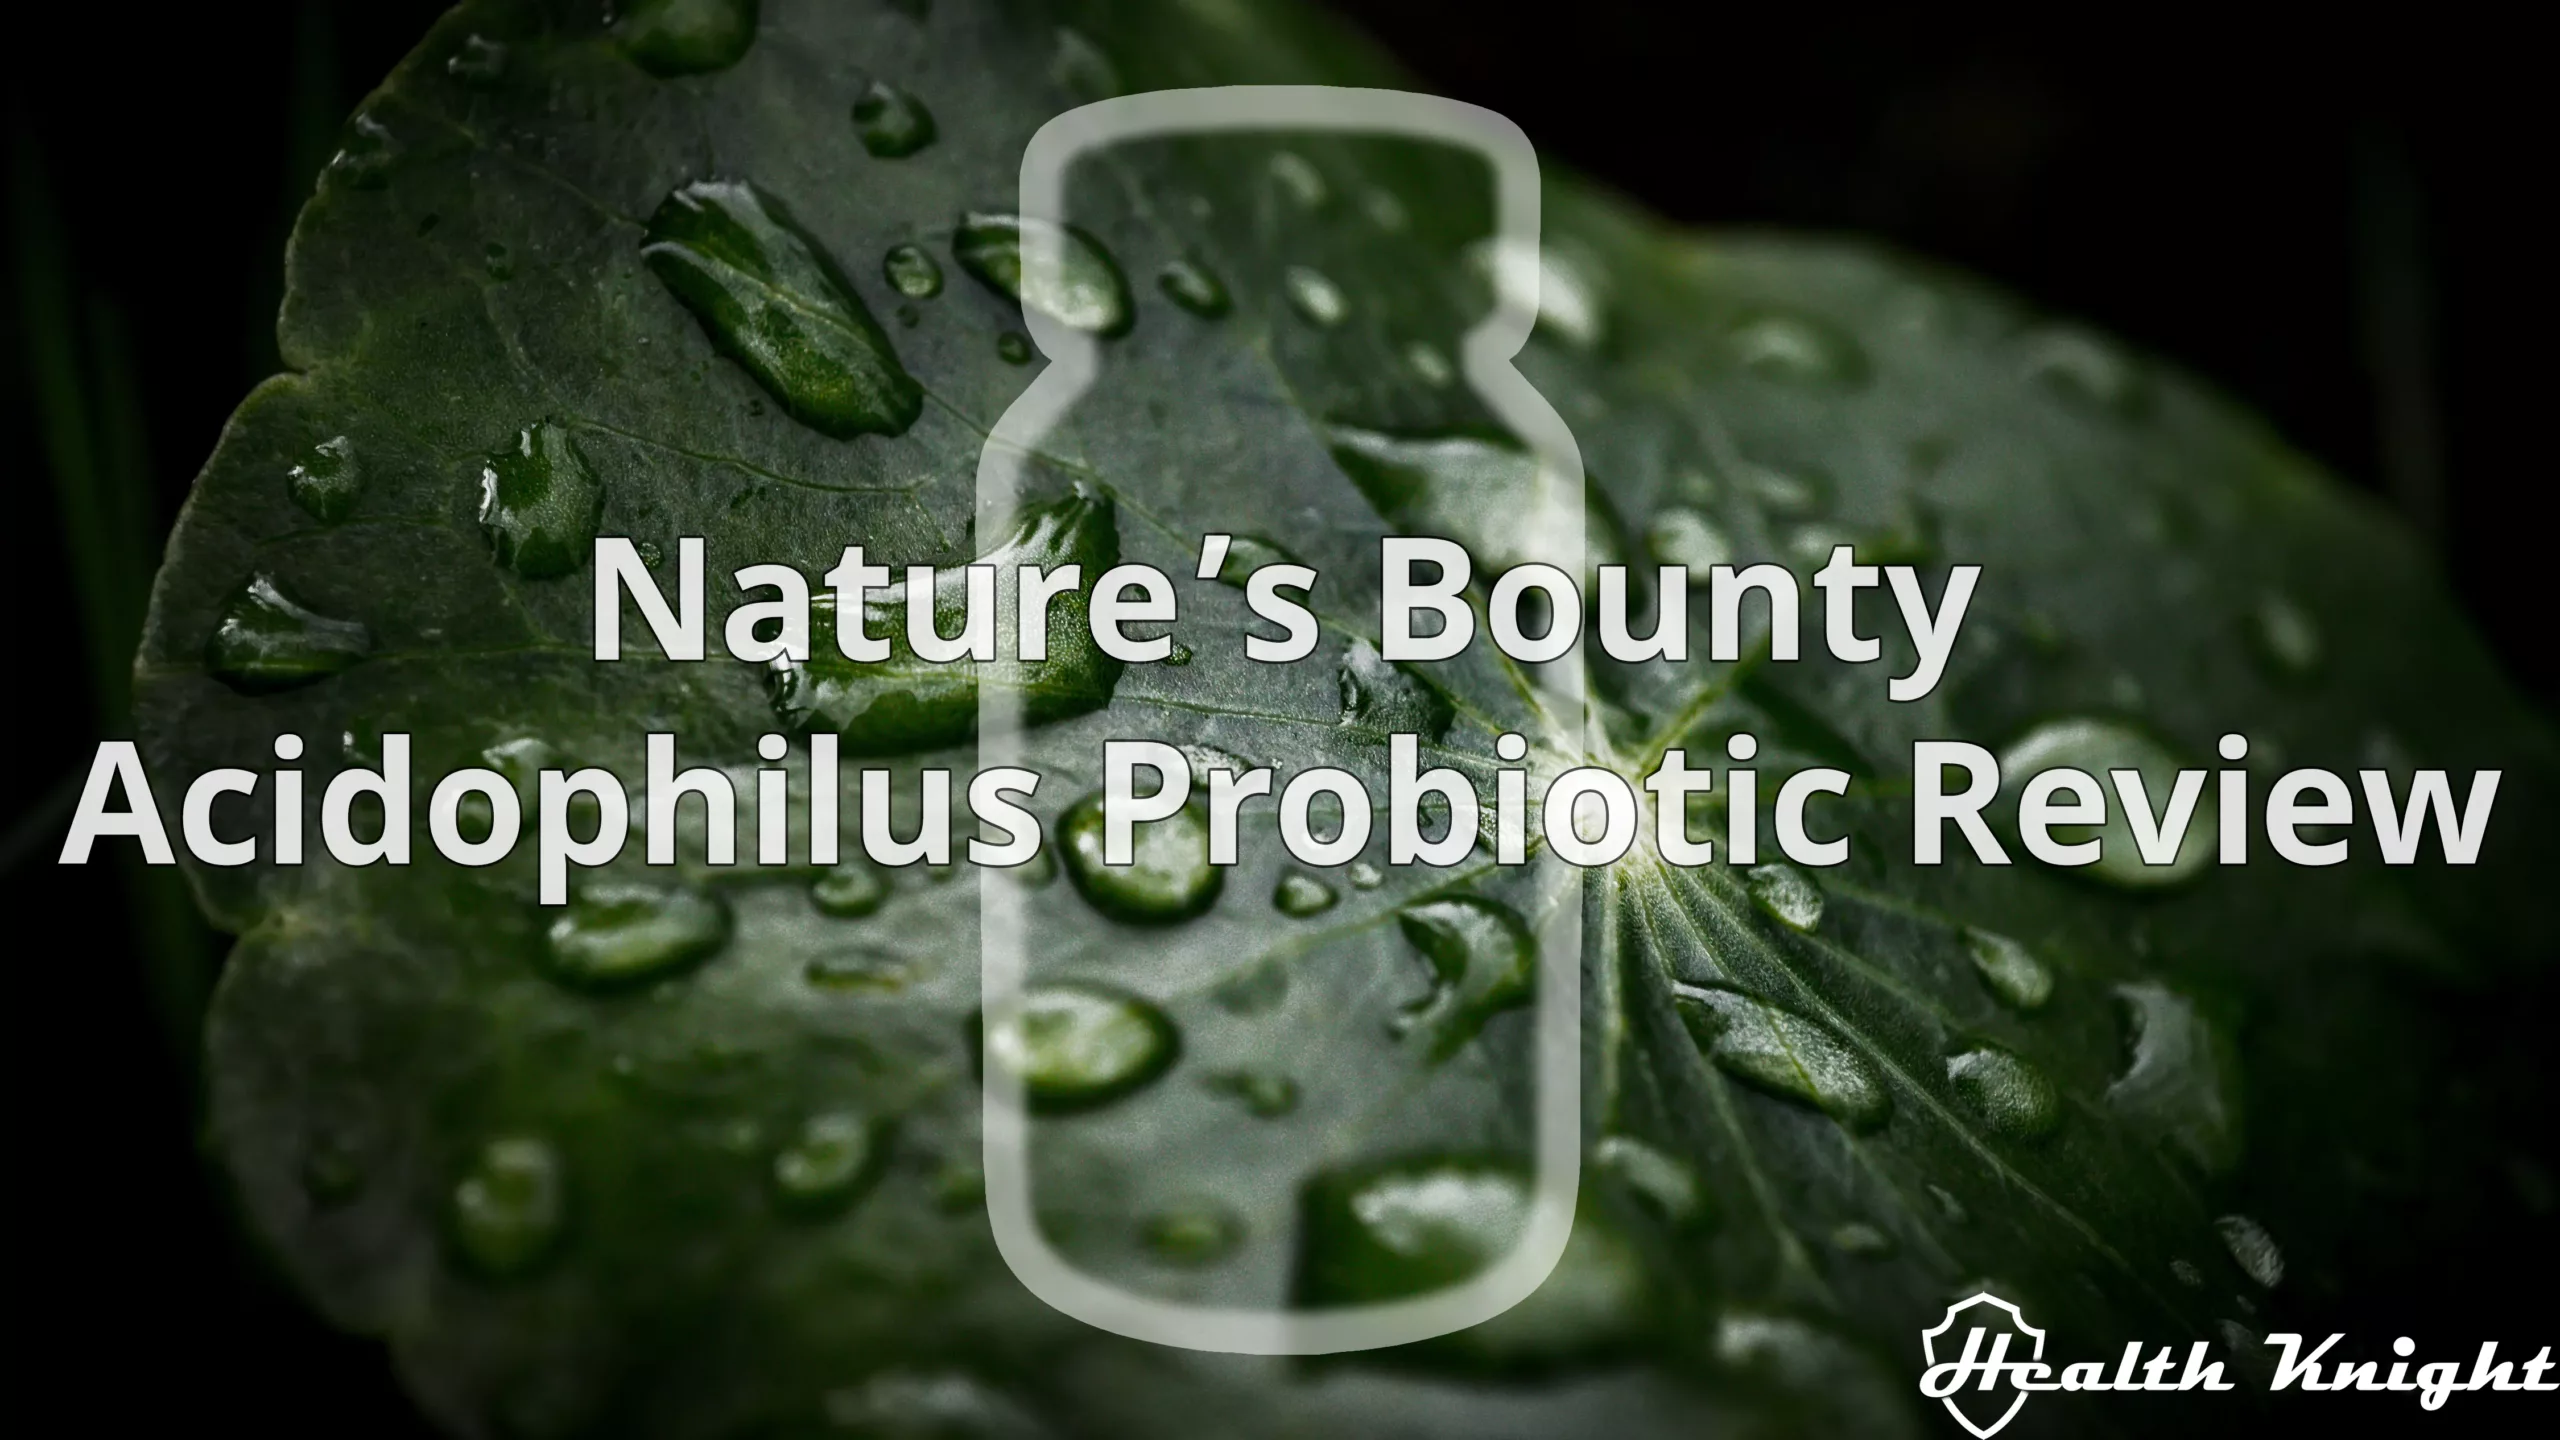 Nature's Bounty Acidophilus Probiotic Review